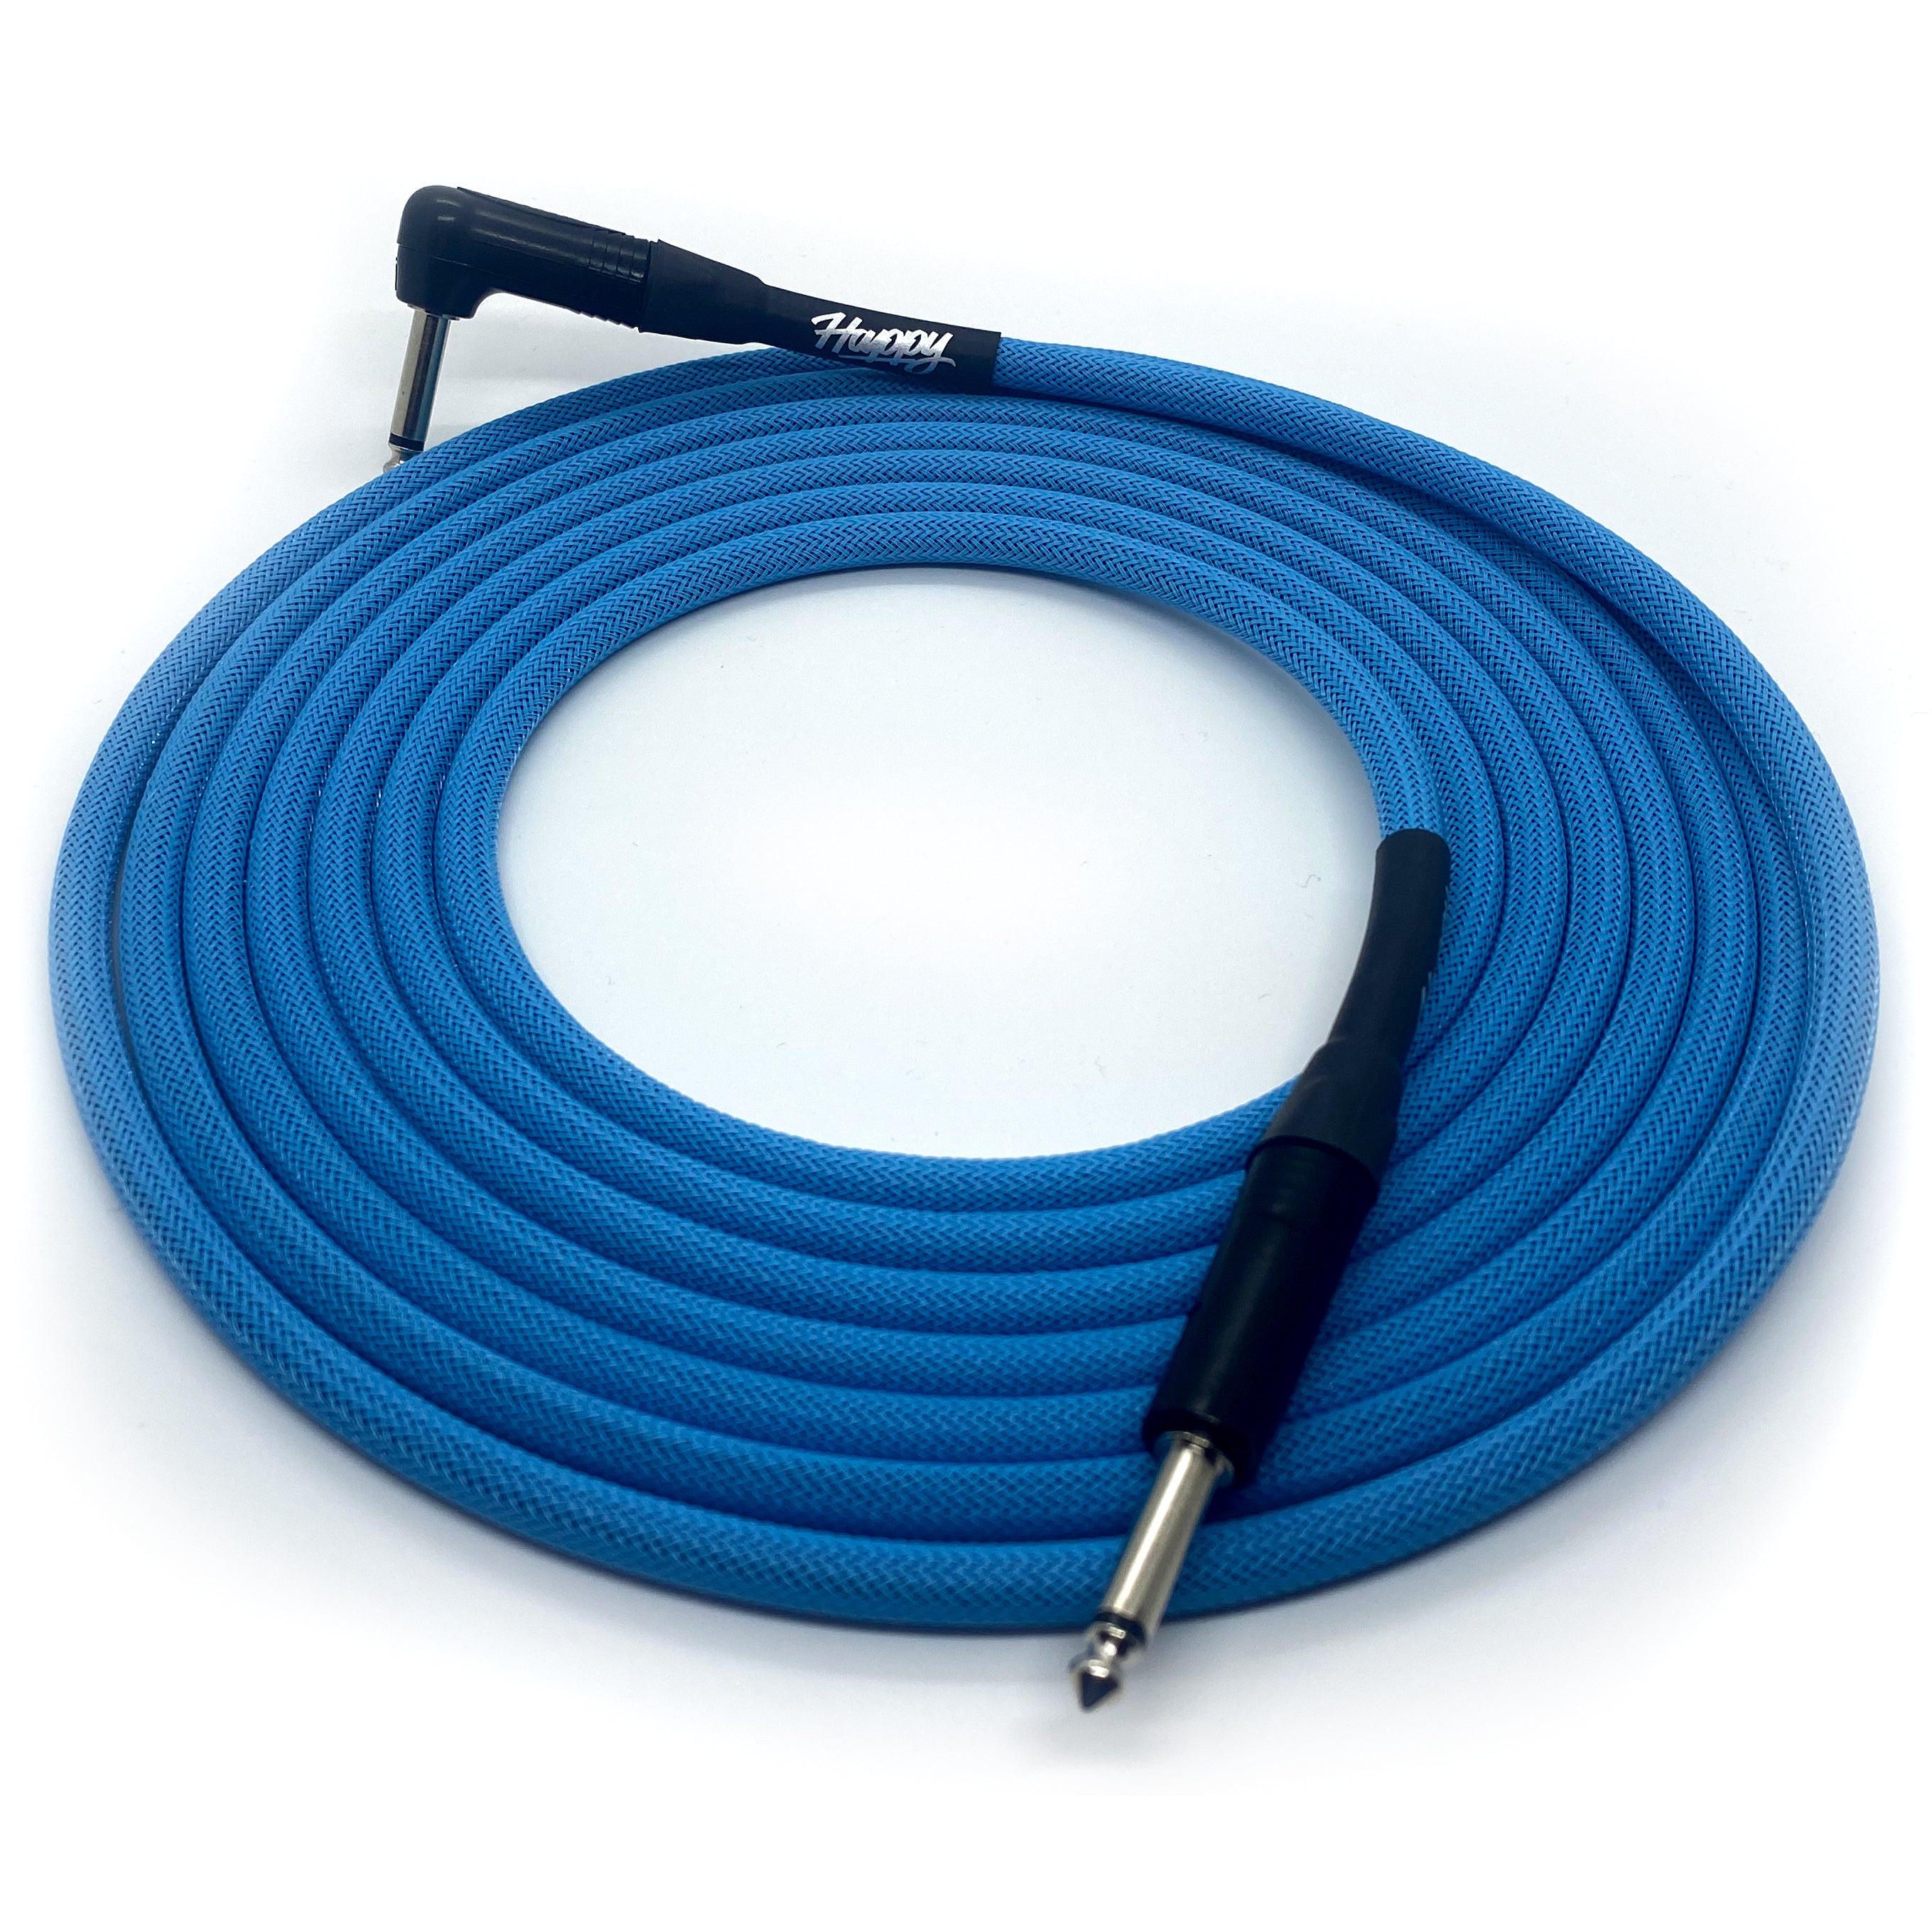 The Elite Instrument Cable - Blue